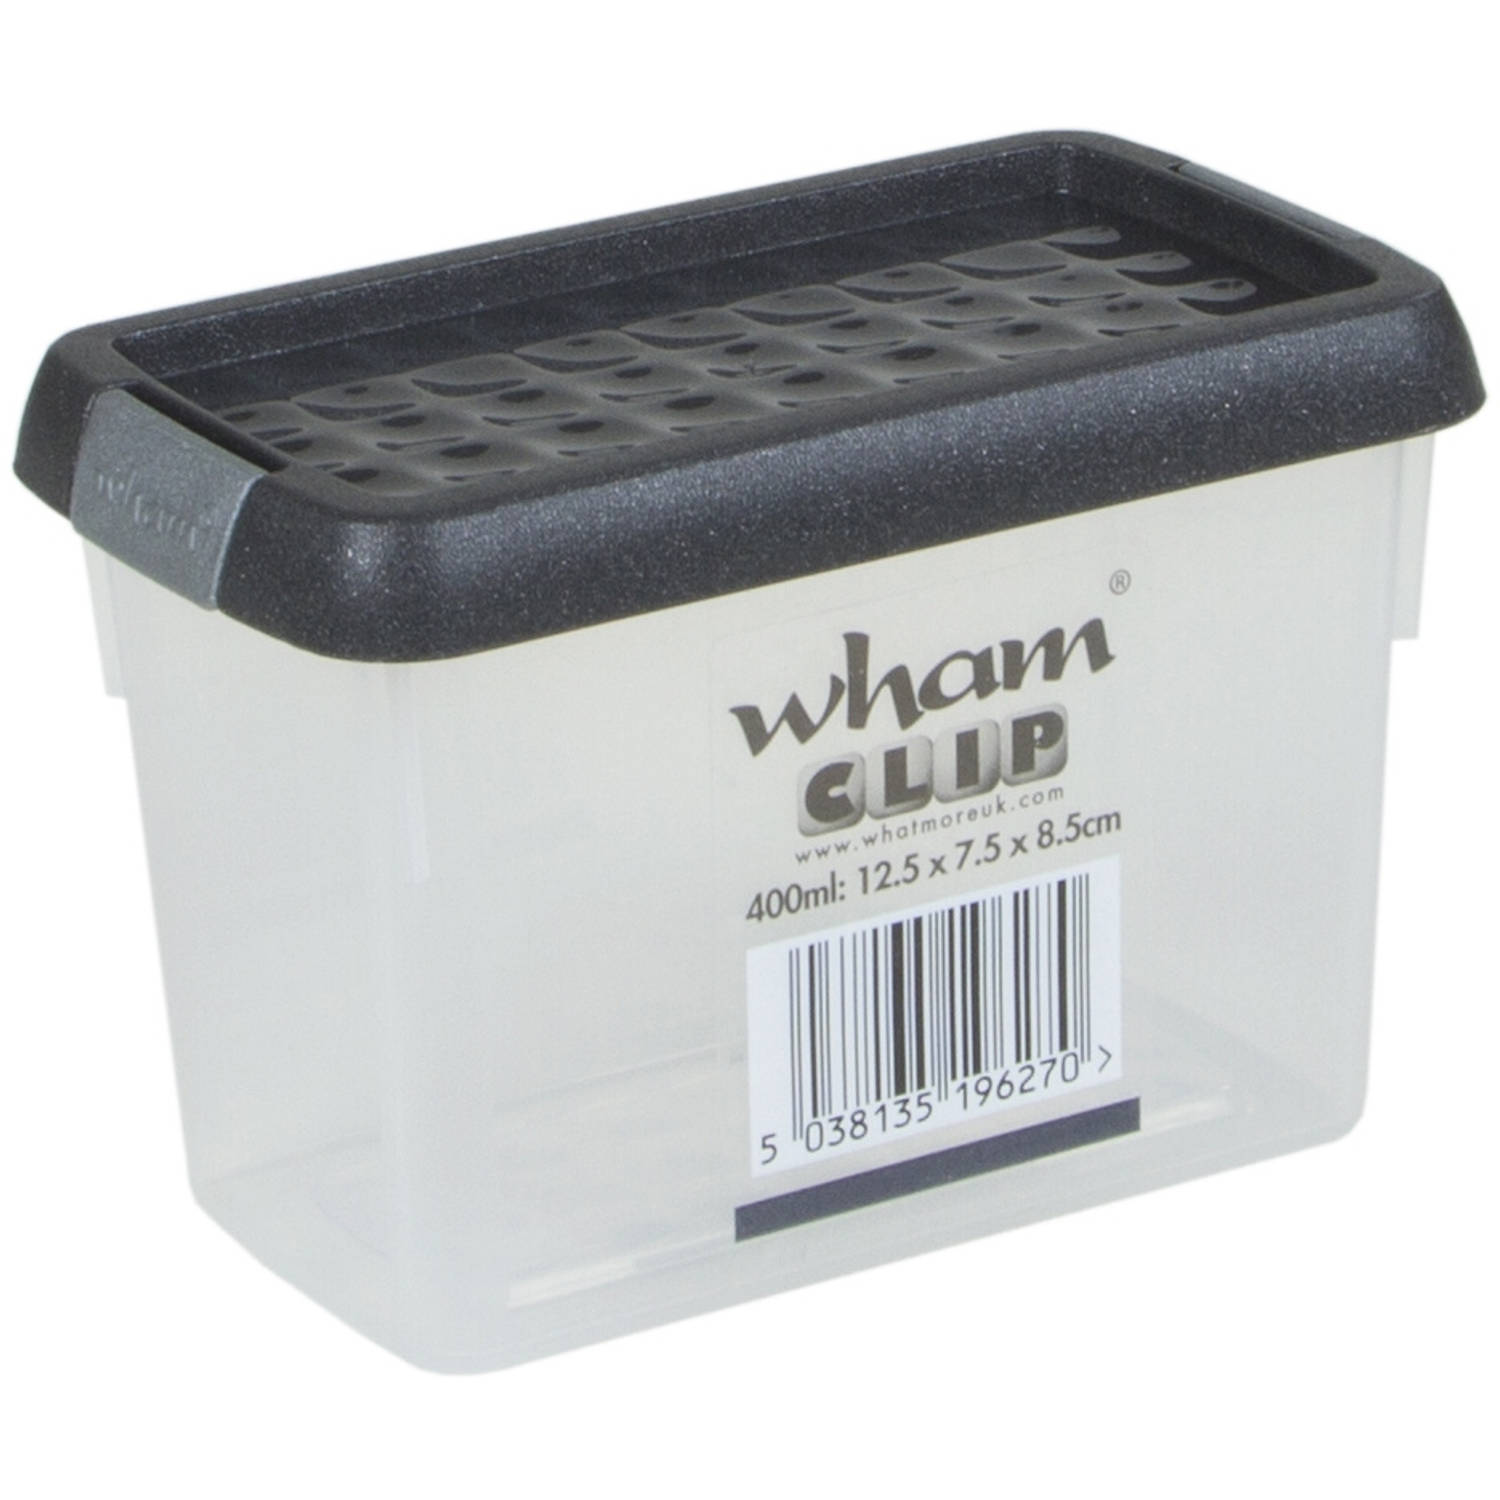 Wham opbergbox Wham 400 ml transparant/grijs